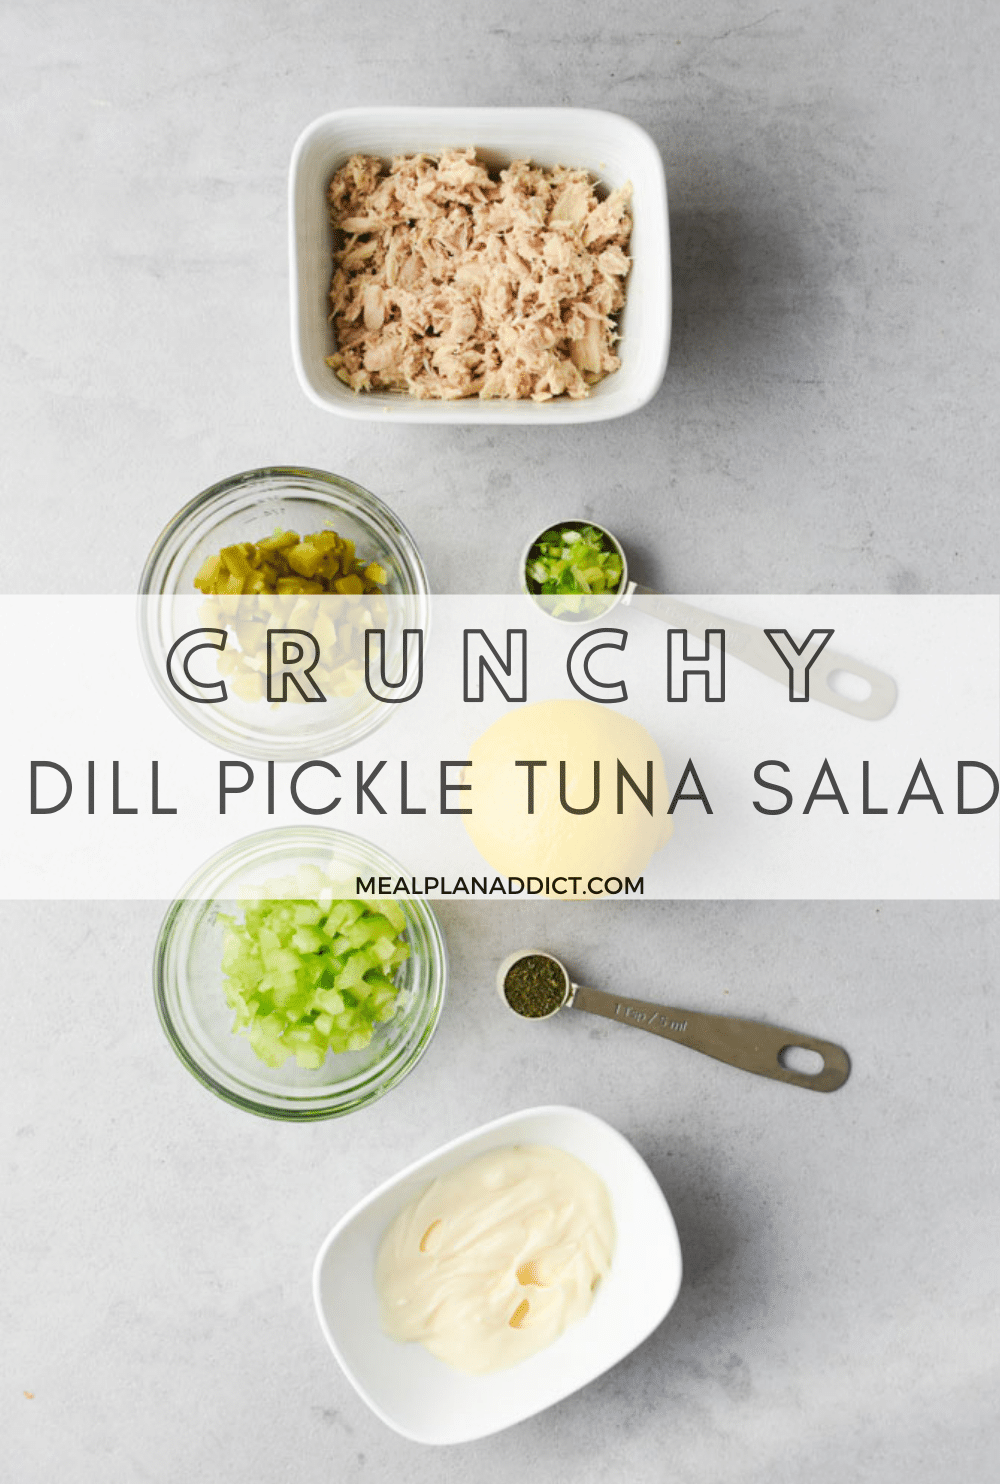 Tuna salad pin for Pinterest